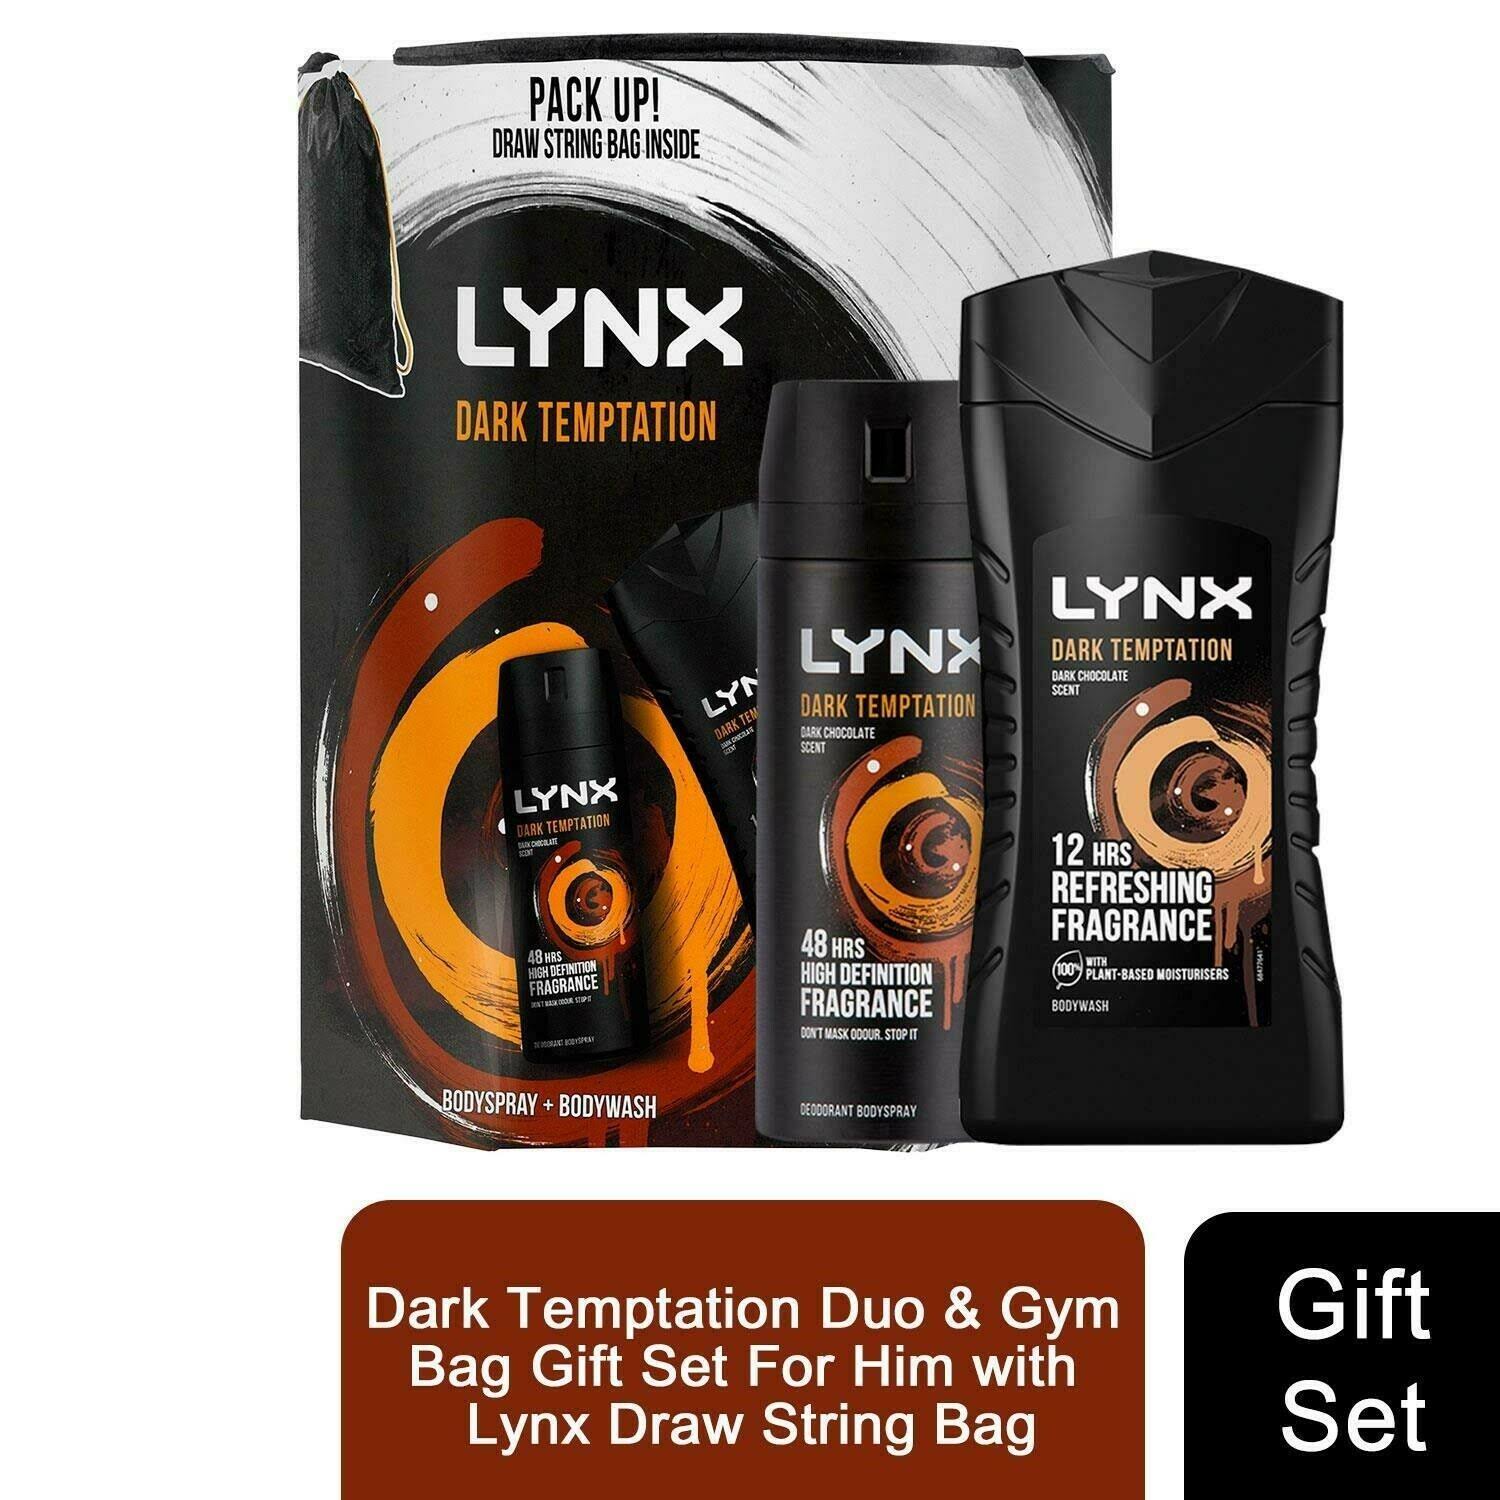 Lynx Dark Temptation Duo and Gym Bag Gift Set